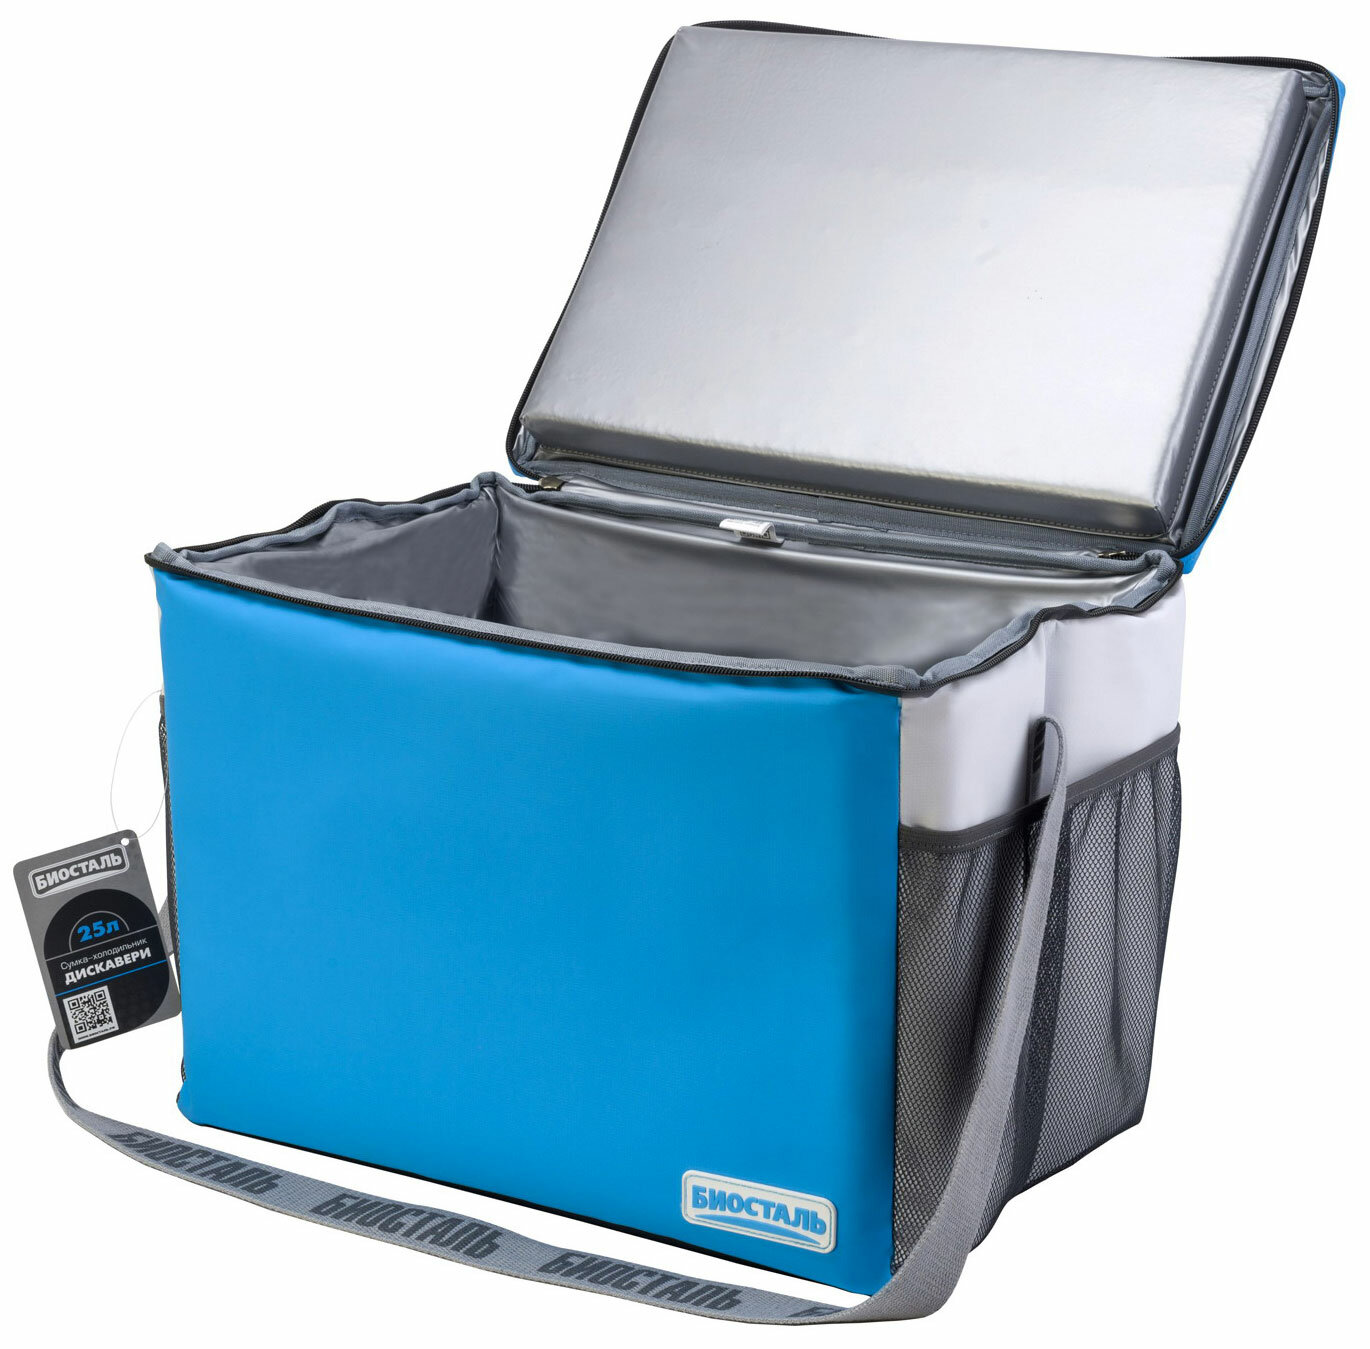 Термосумка Biostal Дискавери (25 л.), синяя TCР-25B сумка холодильник biostal biostal дискавери 20 л серая tcр 20g z